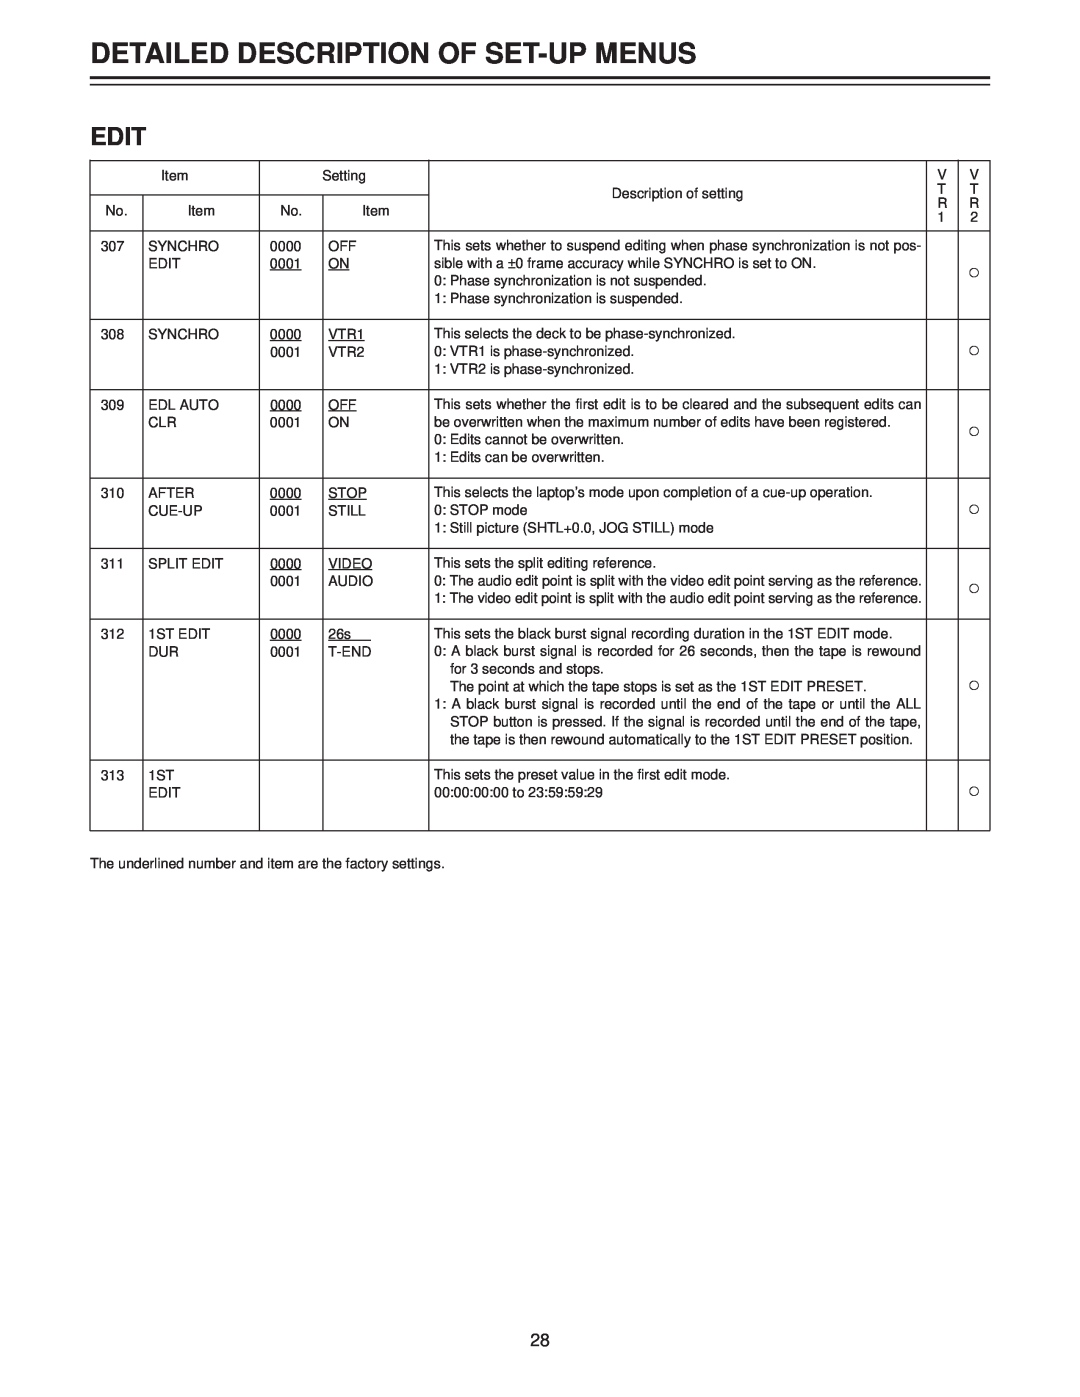 Panasonic AJ-LT85P manual Detailed Description Of Set-Up Menus, Edit 